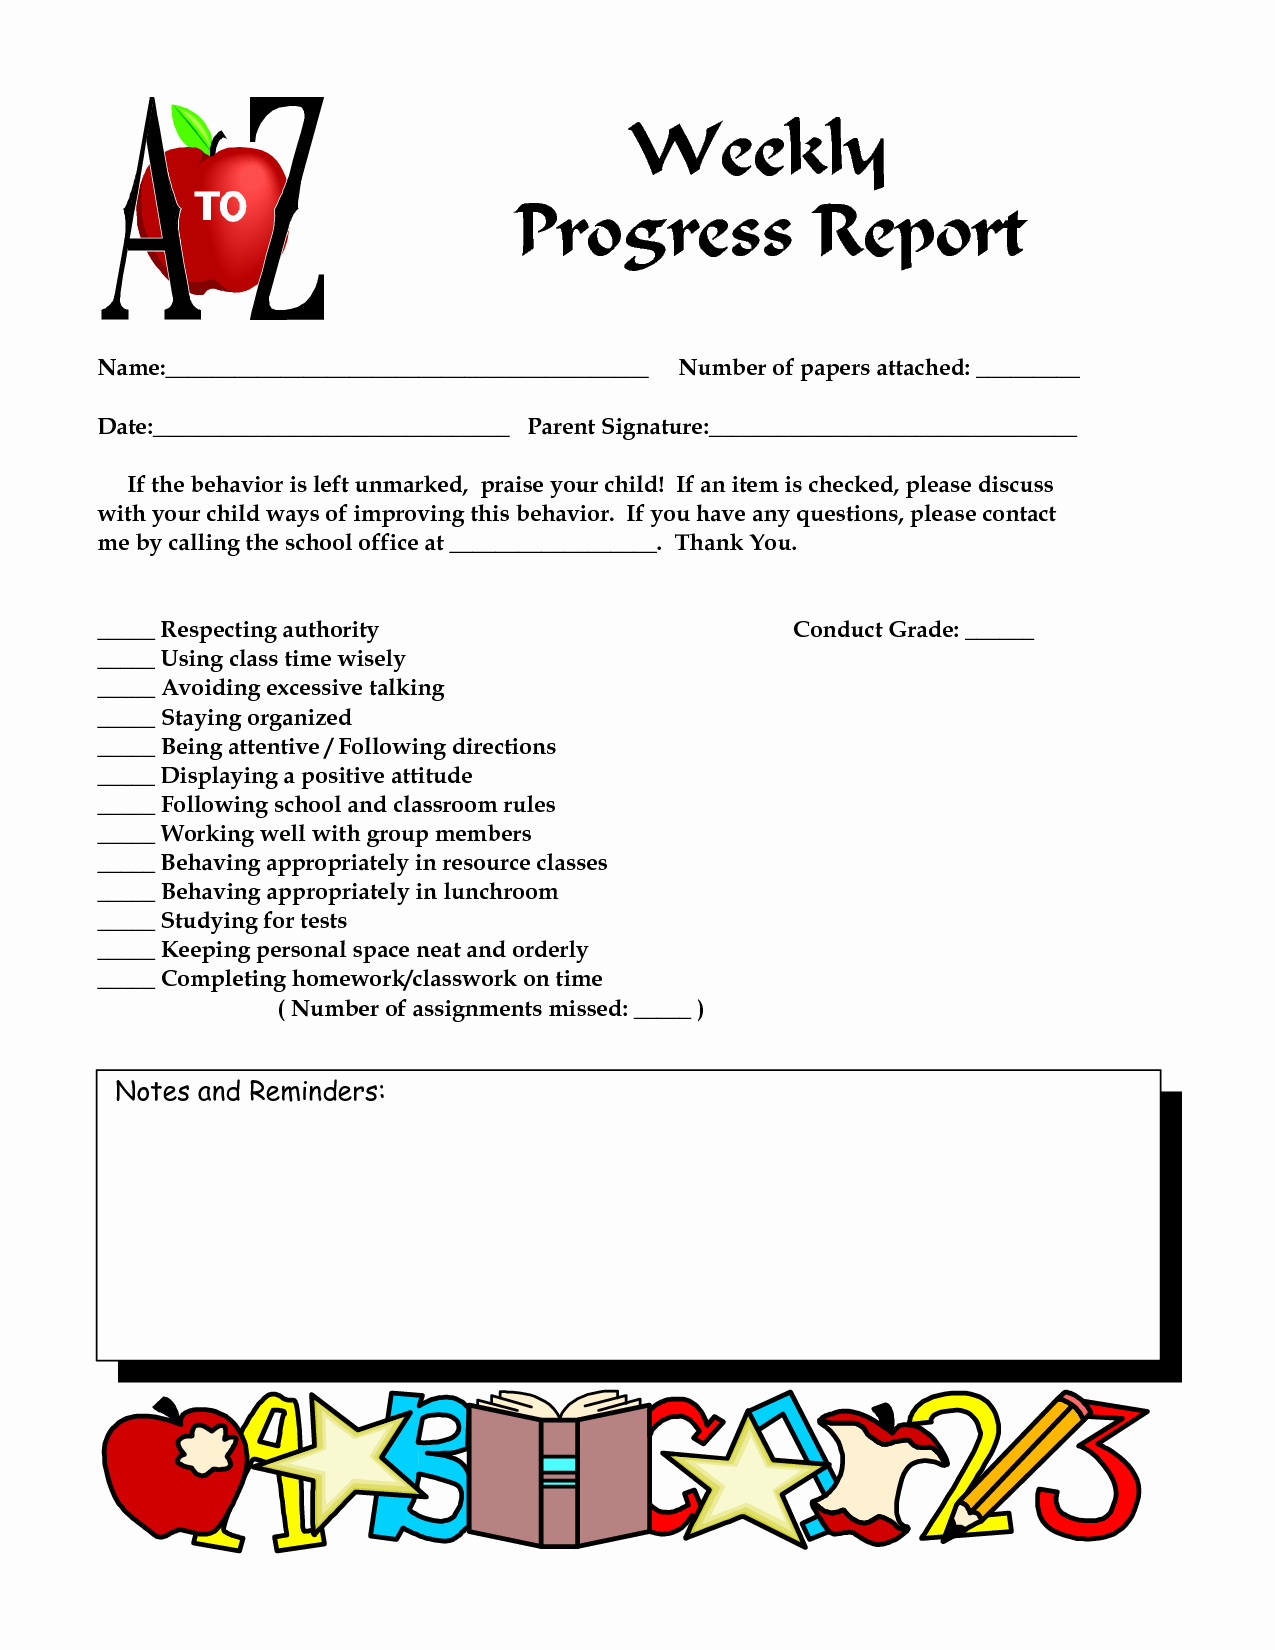 Weekly Progress Report Template Inspirational Best S Of Weekly Progress Report Sample School